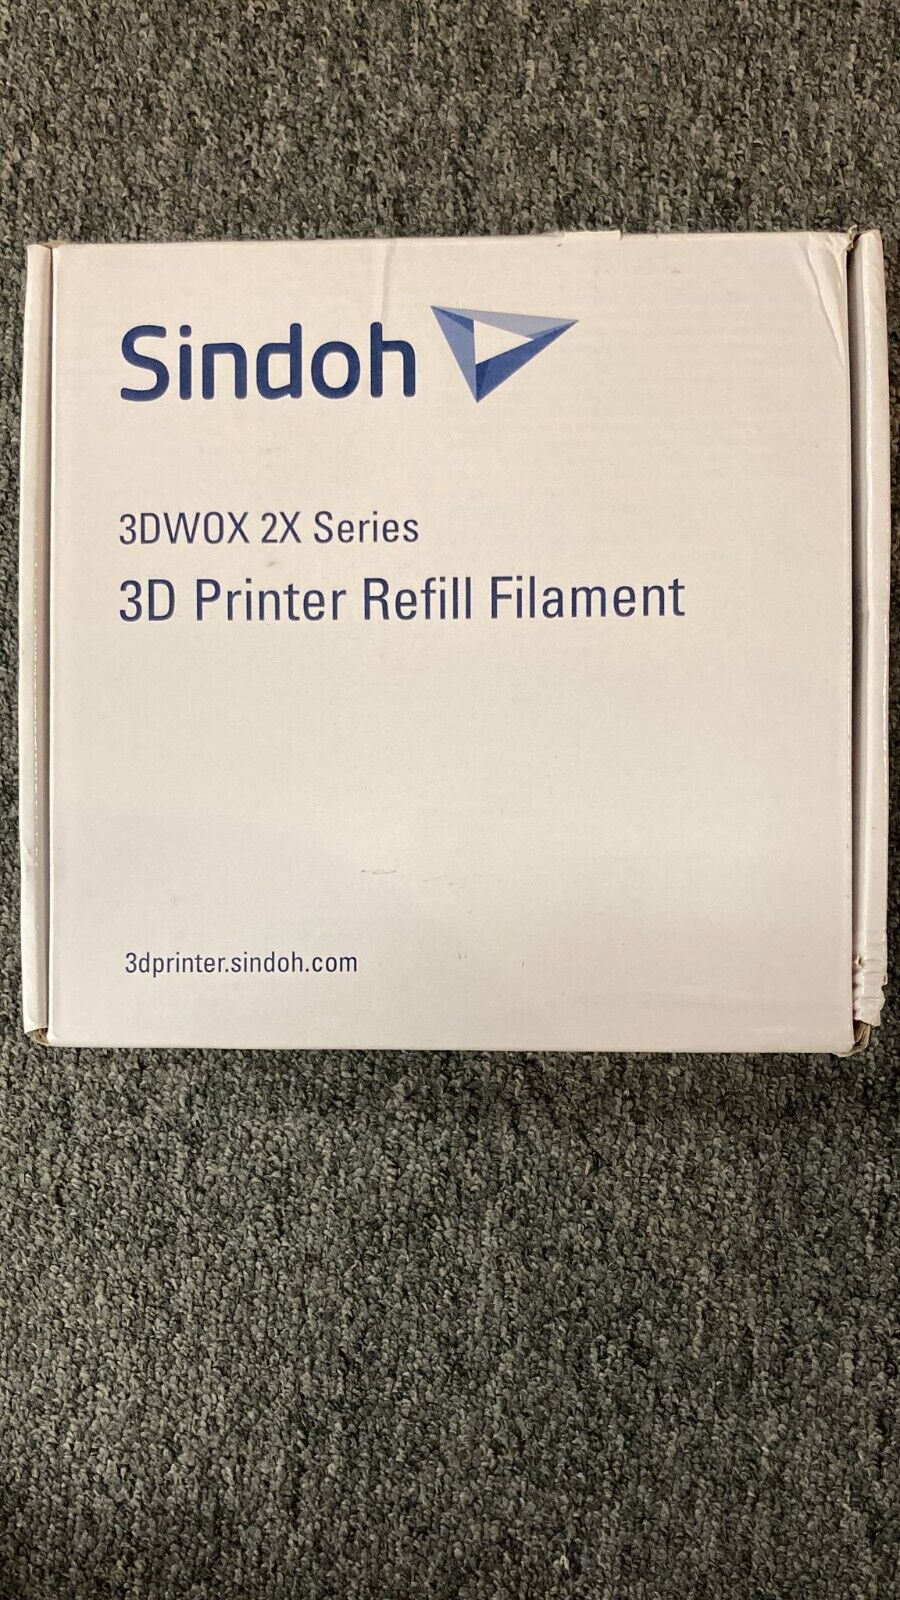 Sindoh 3DWOX 2X Series 3D Printer Refill Filament - FLEX, WHITE 1.75mm 500g